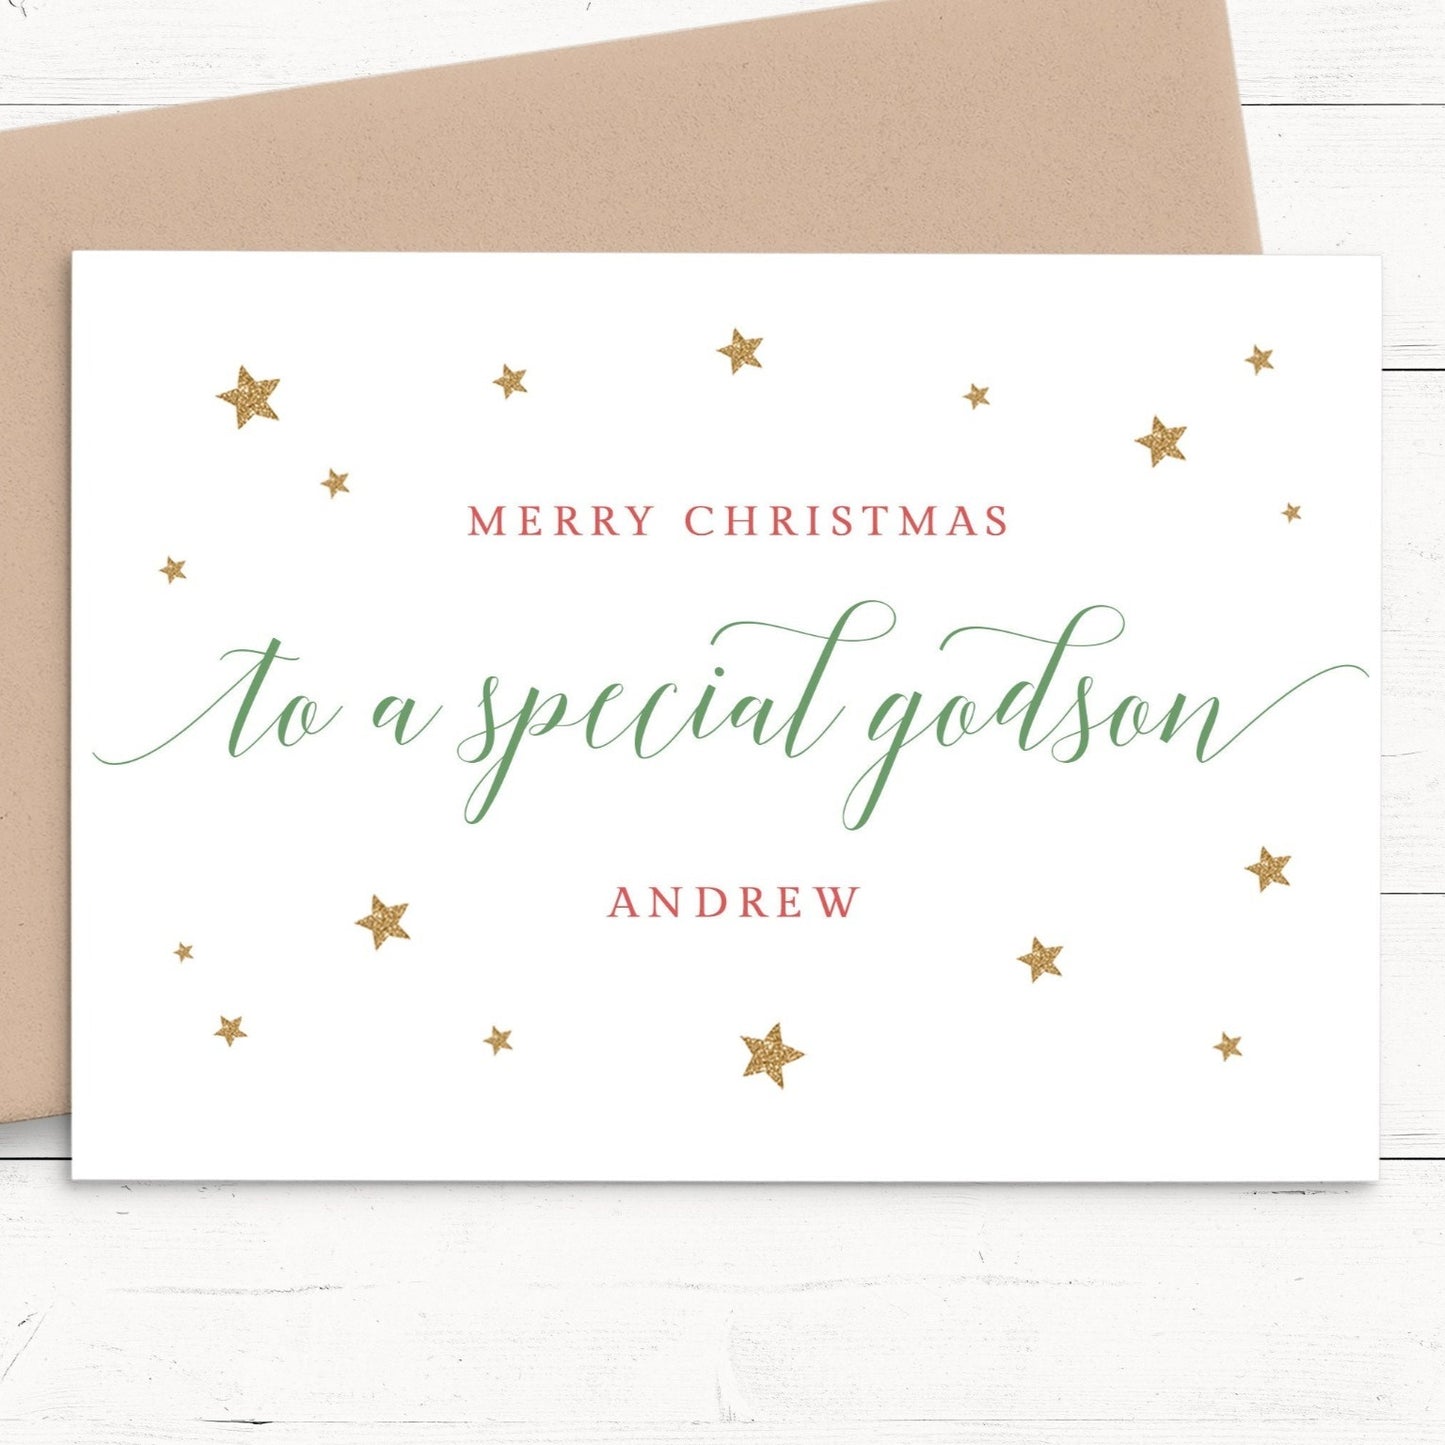 merry christmas special godson personalised christmas card matte white cardstock kraft brown envelope boy man god-son